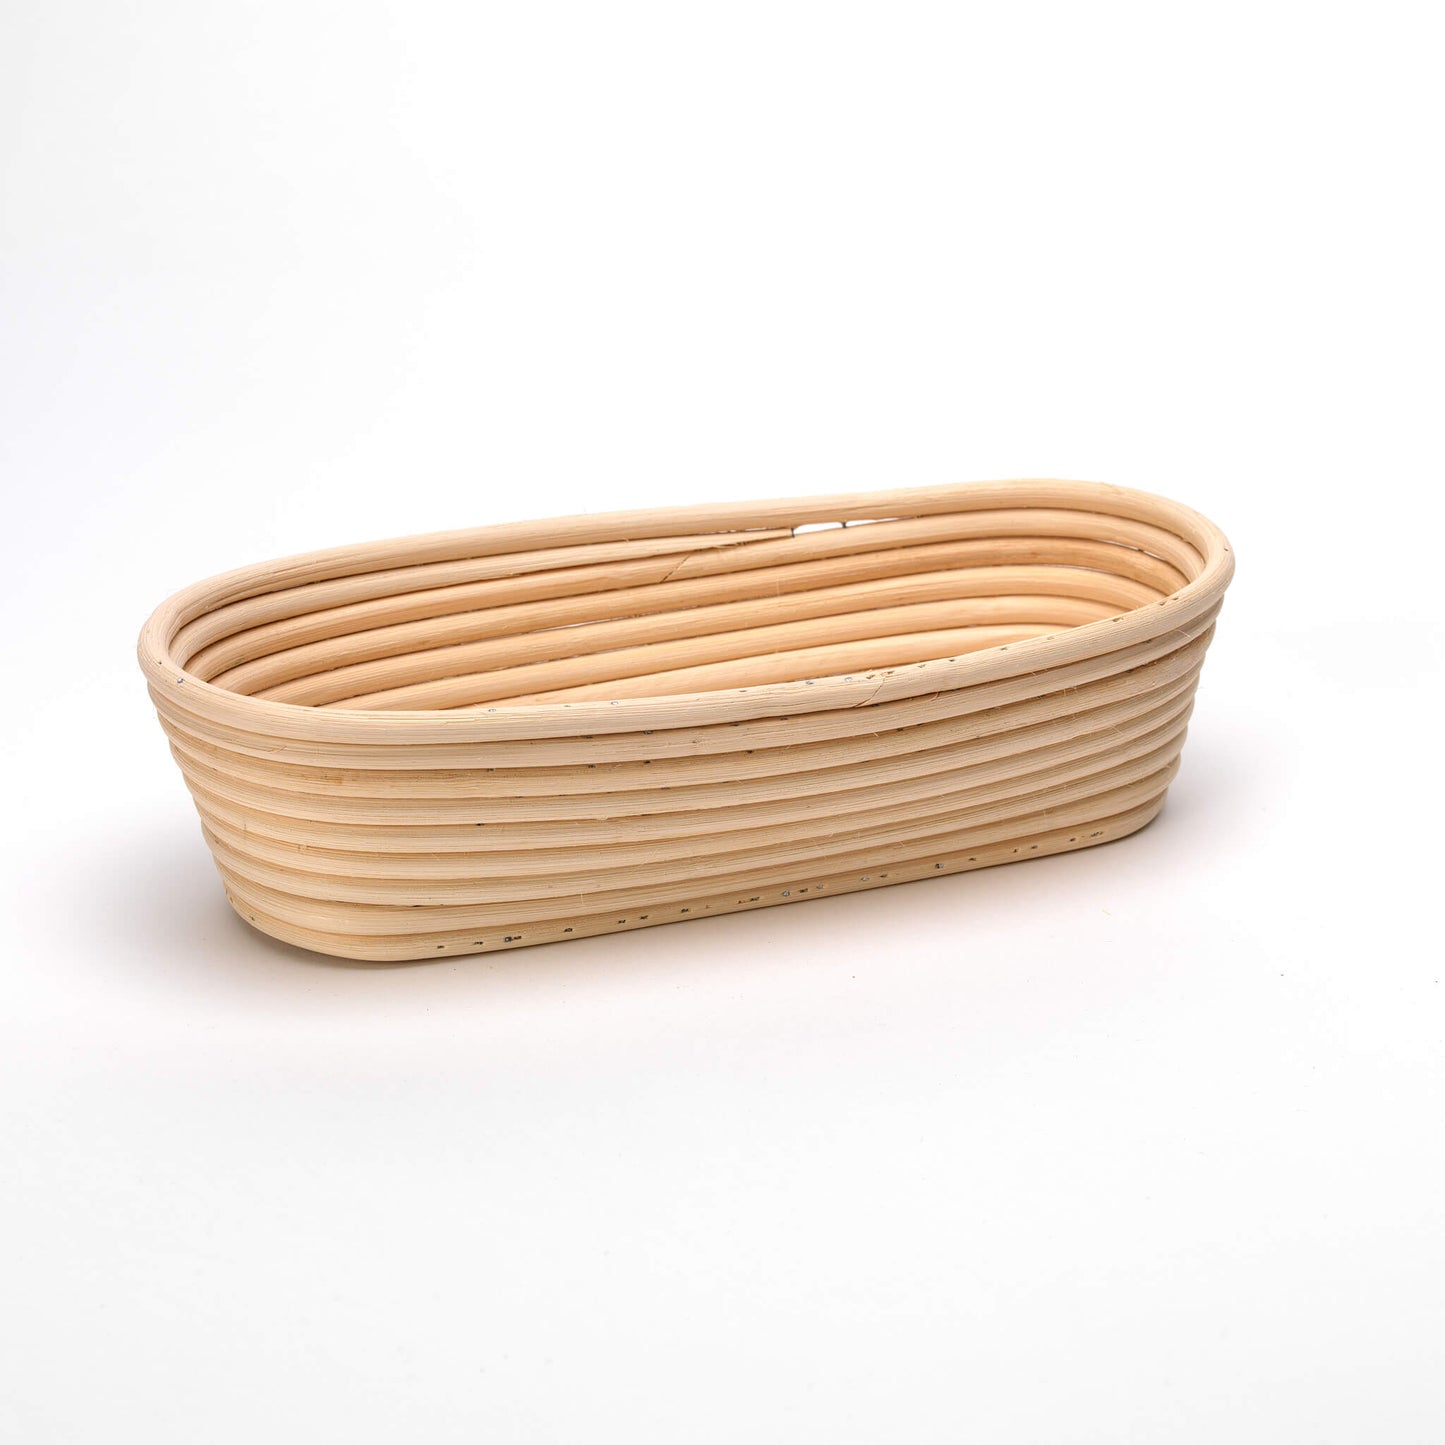 1kg / 2.2lb Oval 30cm Long Rattan Cane Banneton with Liner  Bread Dough Proving Proofing Basket Brotform